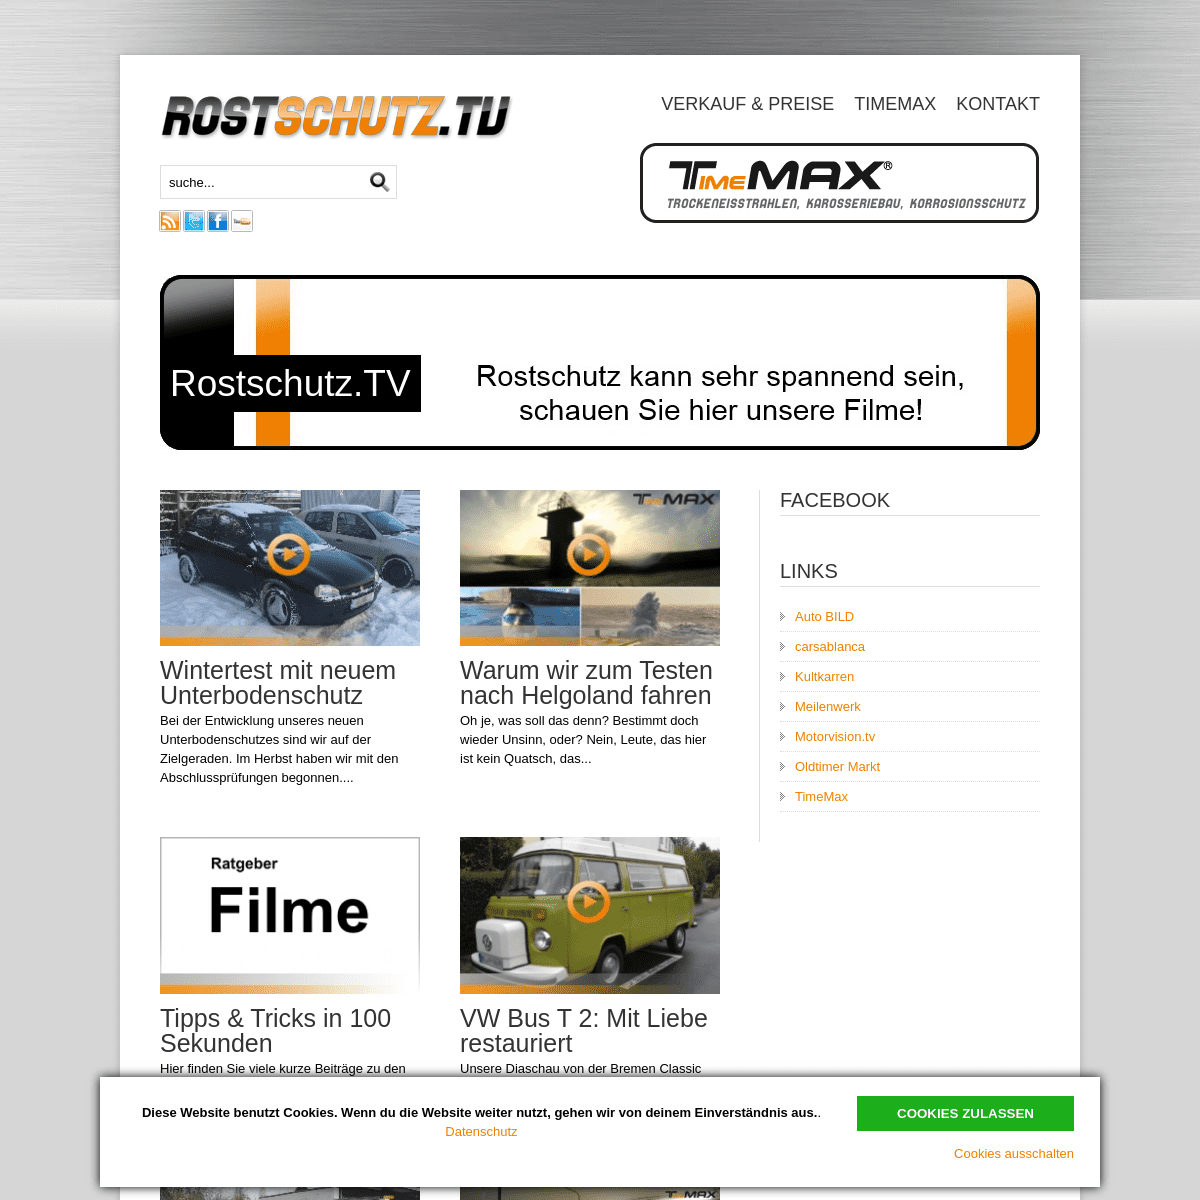 A complete backup of rostschutz.tv